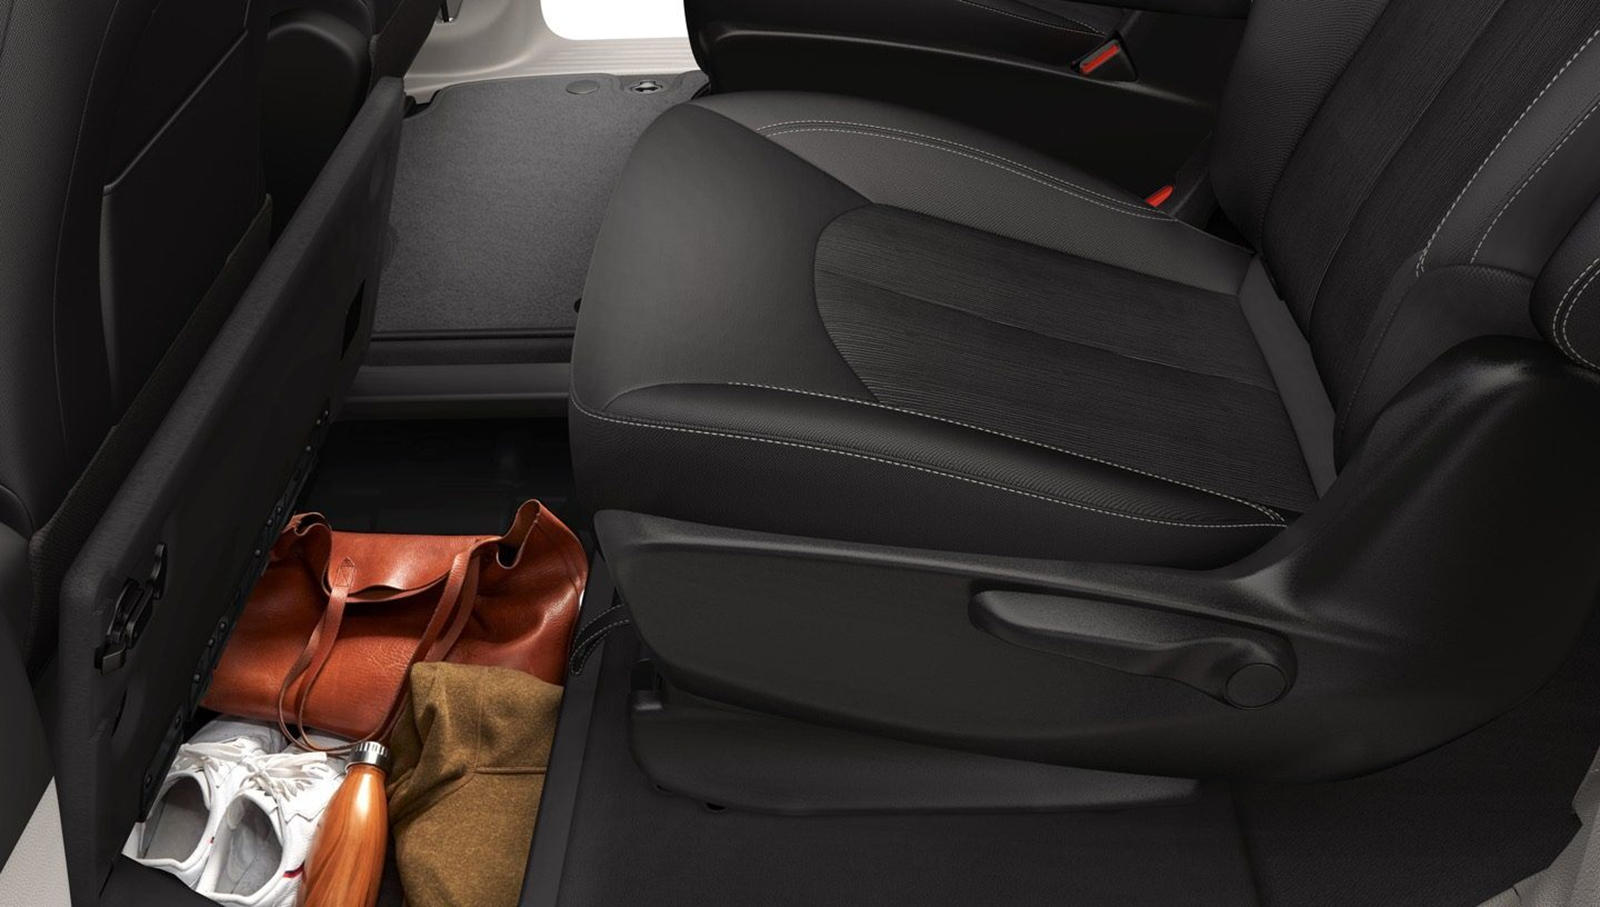 2023 Chrysler Voyager Seat Details